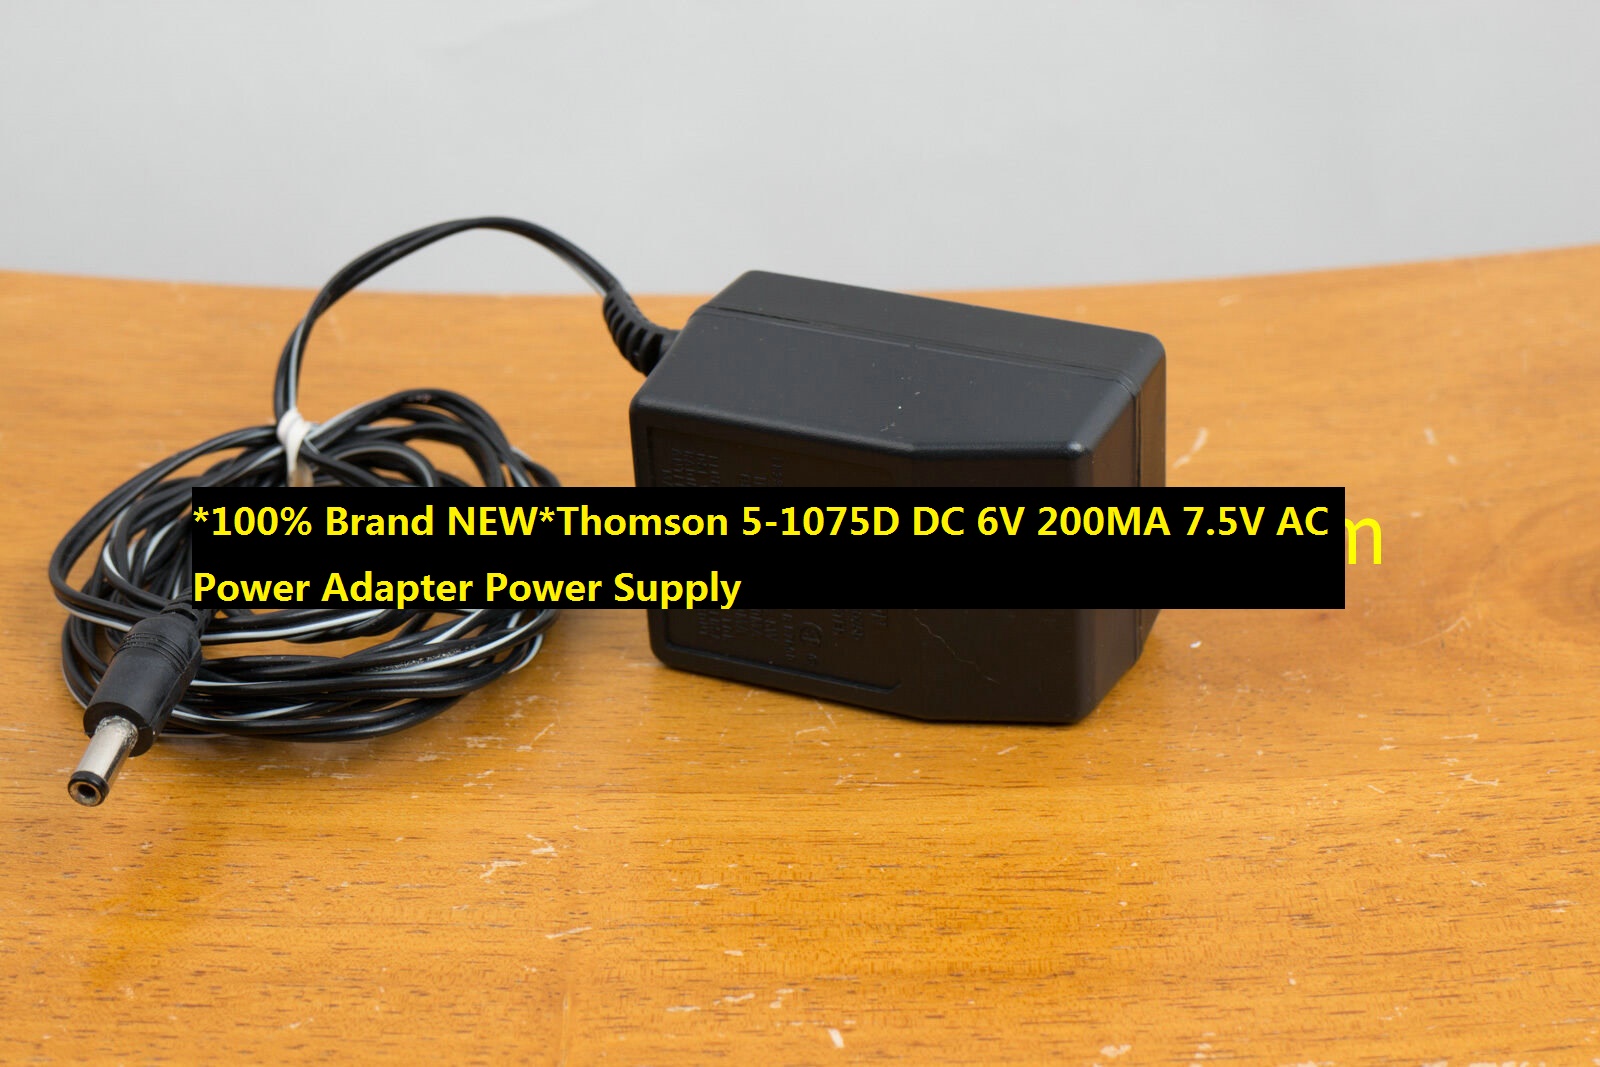 *100% Brand NEW*Thomson 5-1075D DC 6V 200MA 7.5V AC Power Adapter Power Supply